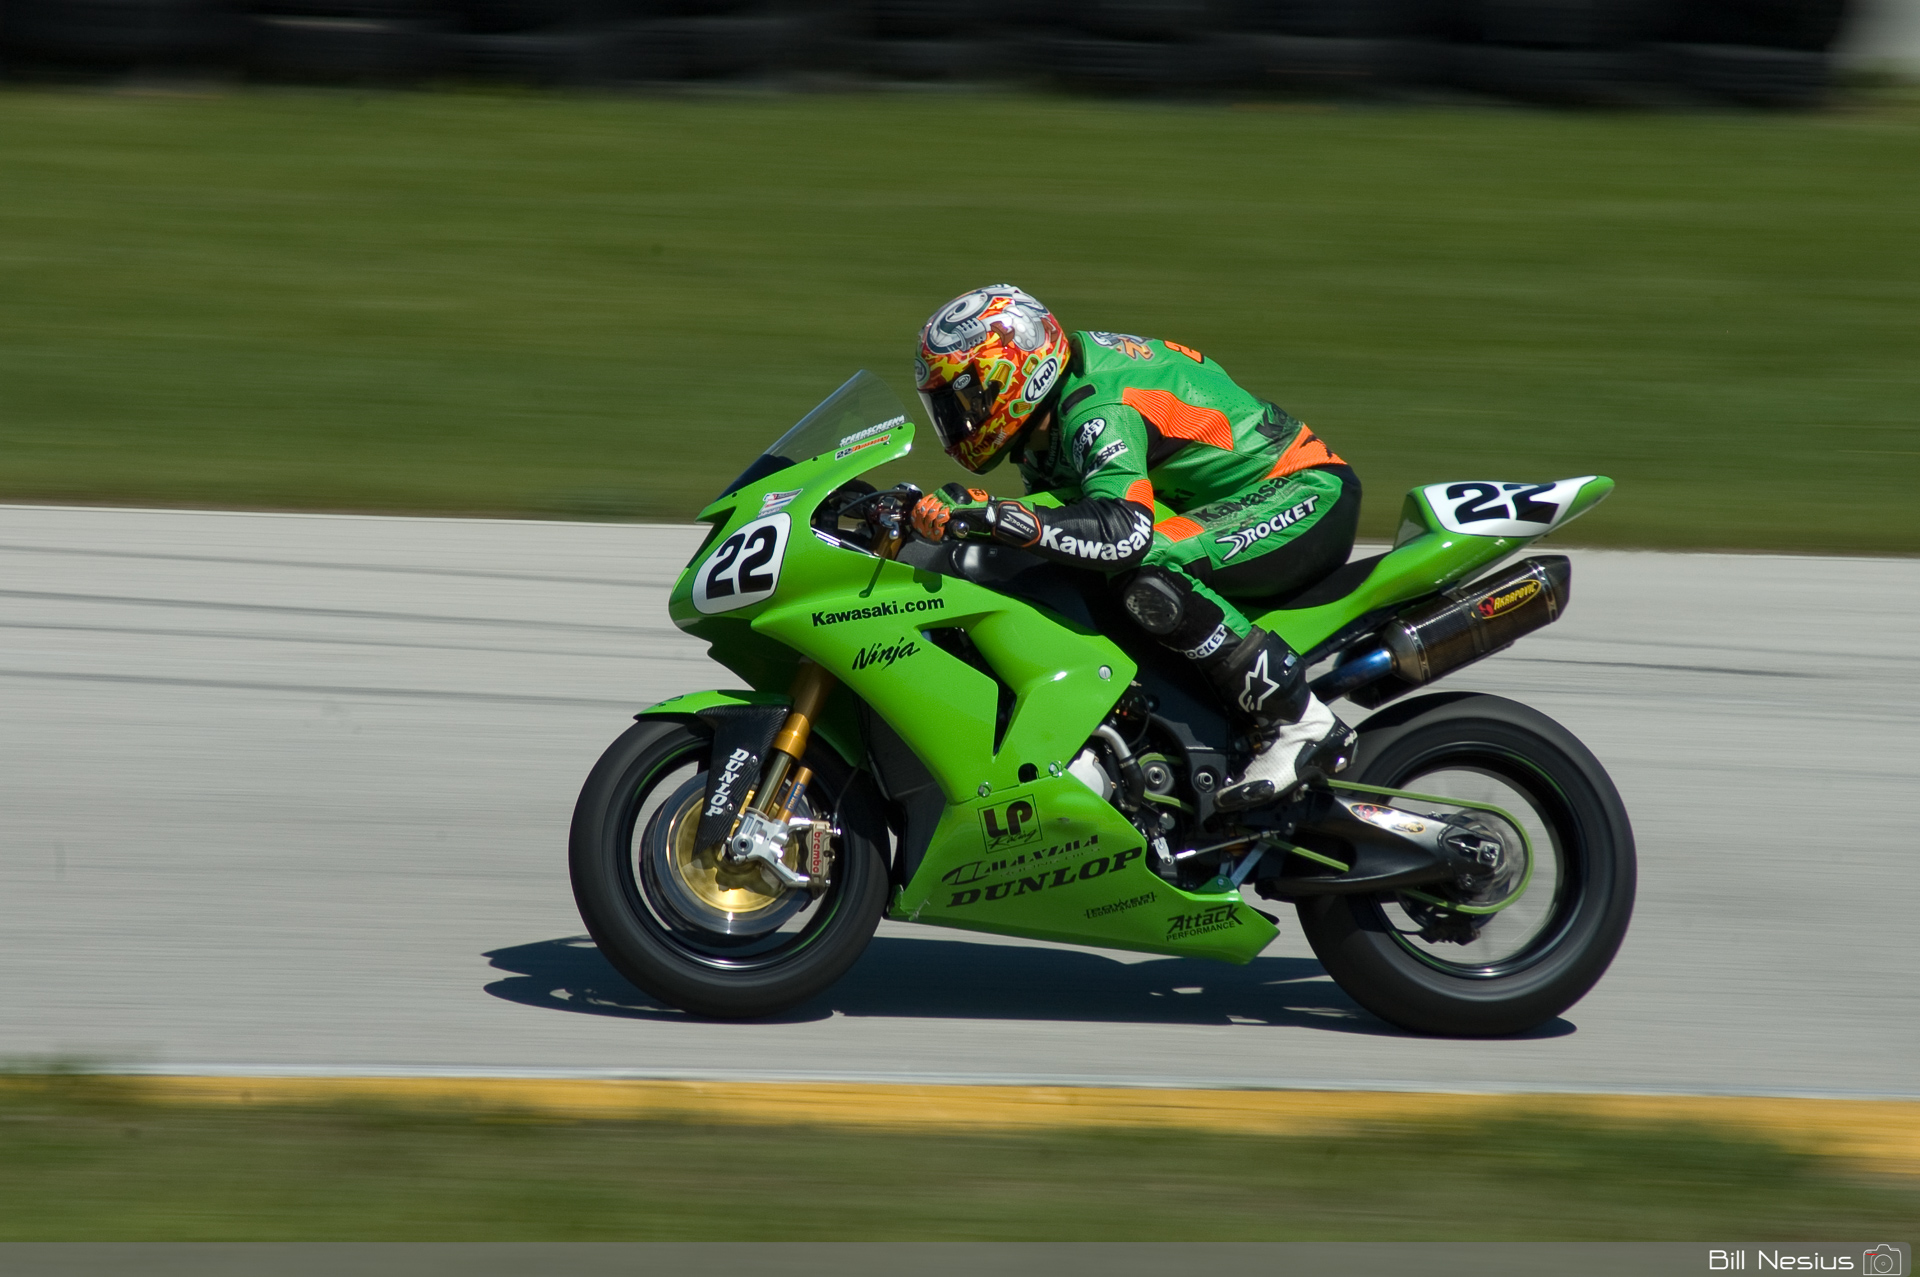 Tommy Hayden on the Number 22 Kawasaki Ninja ZX-10RR / DSC_1461 / 